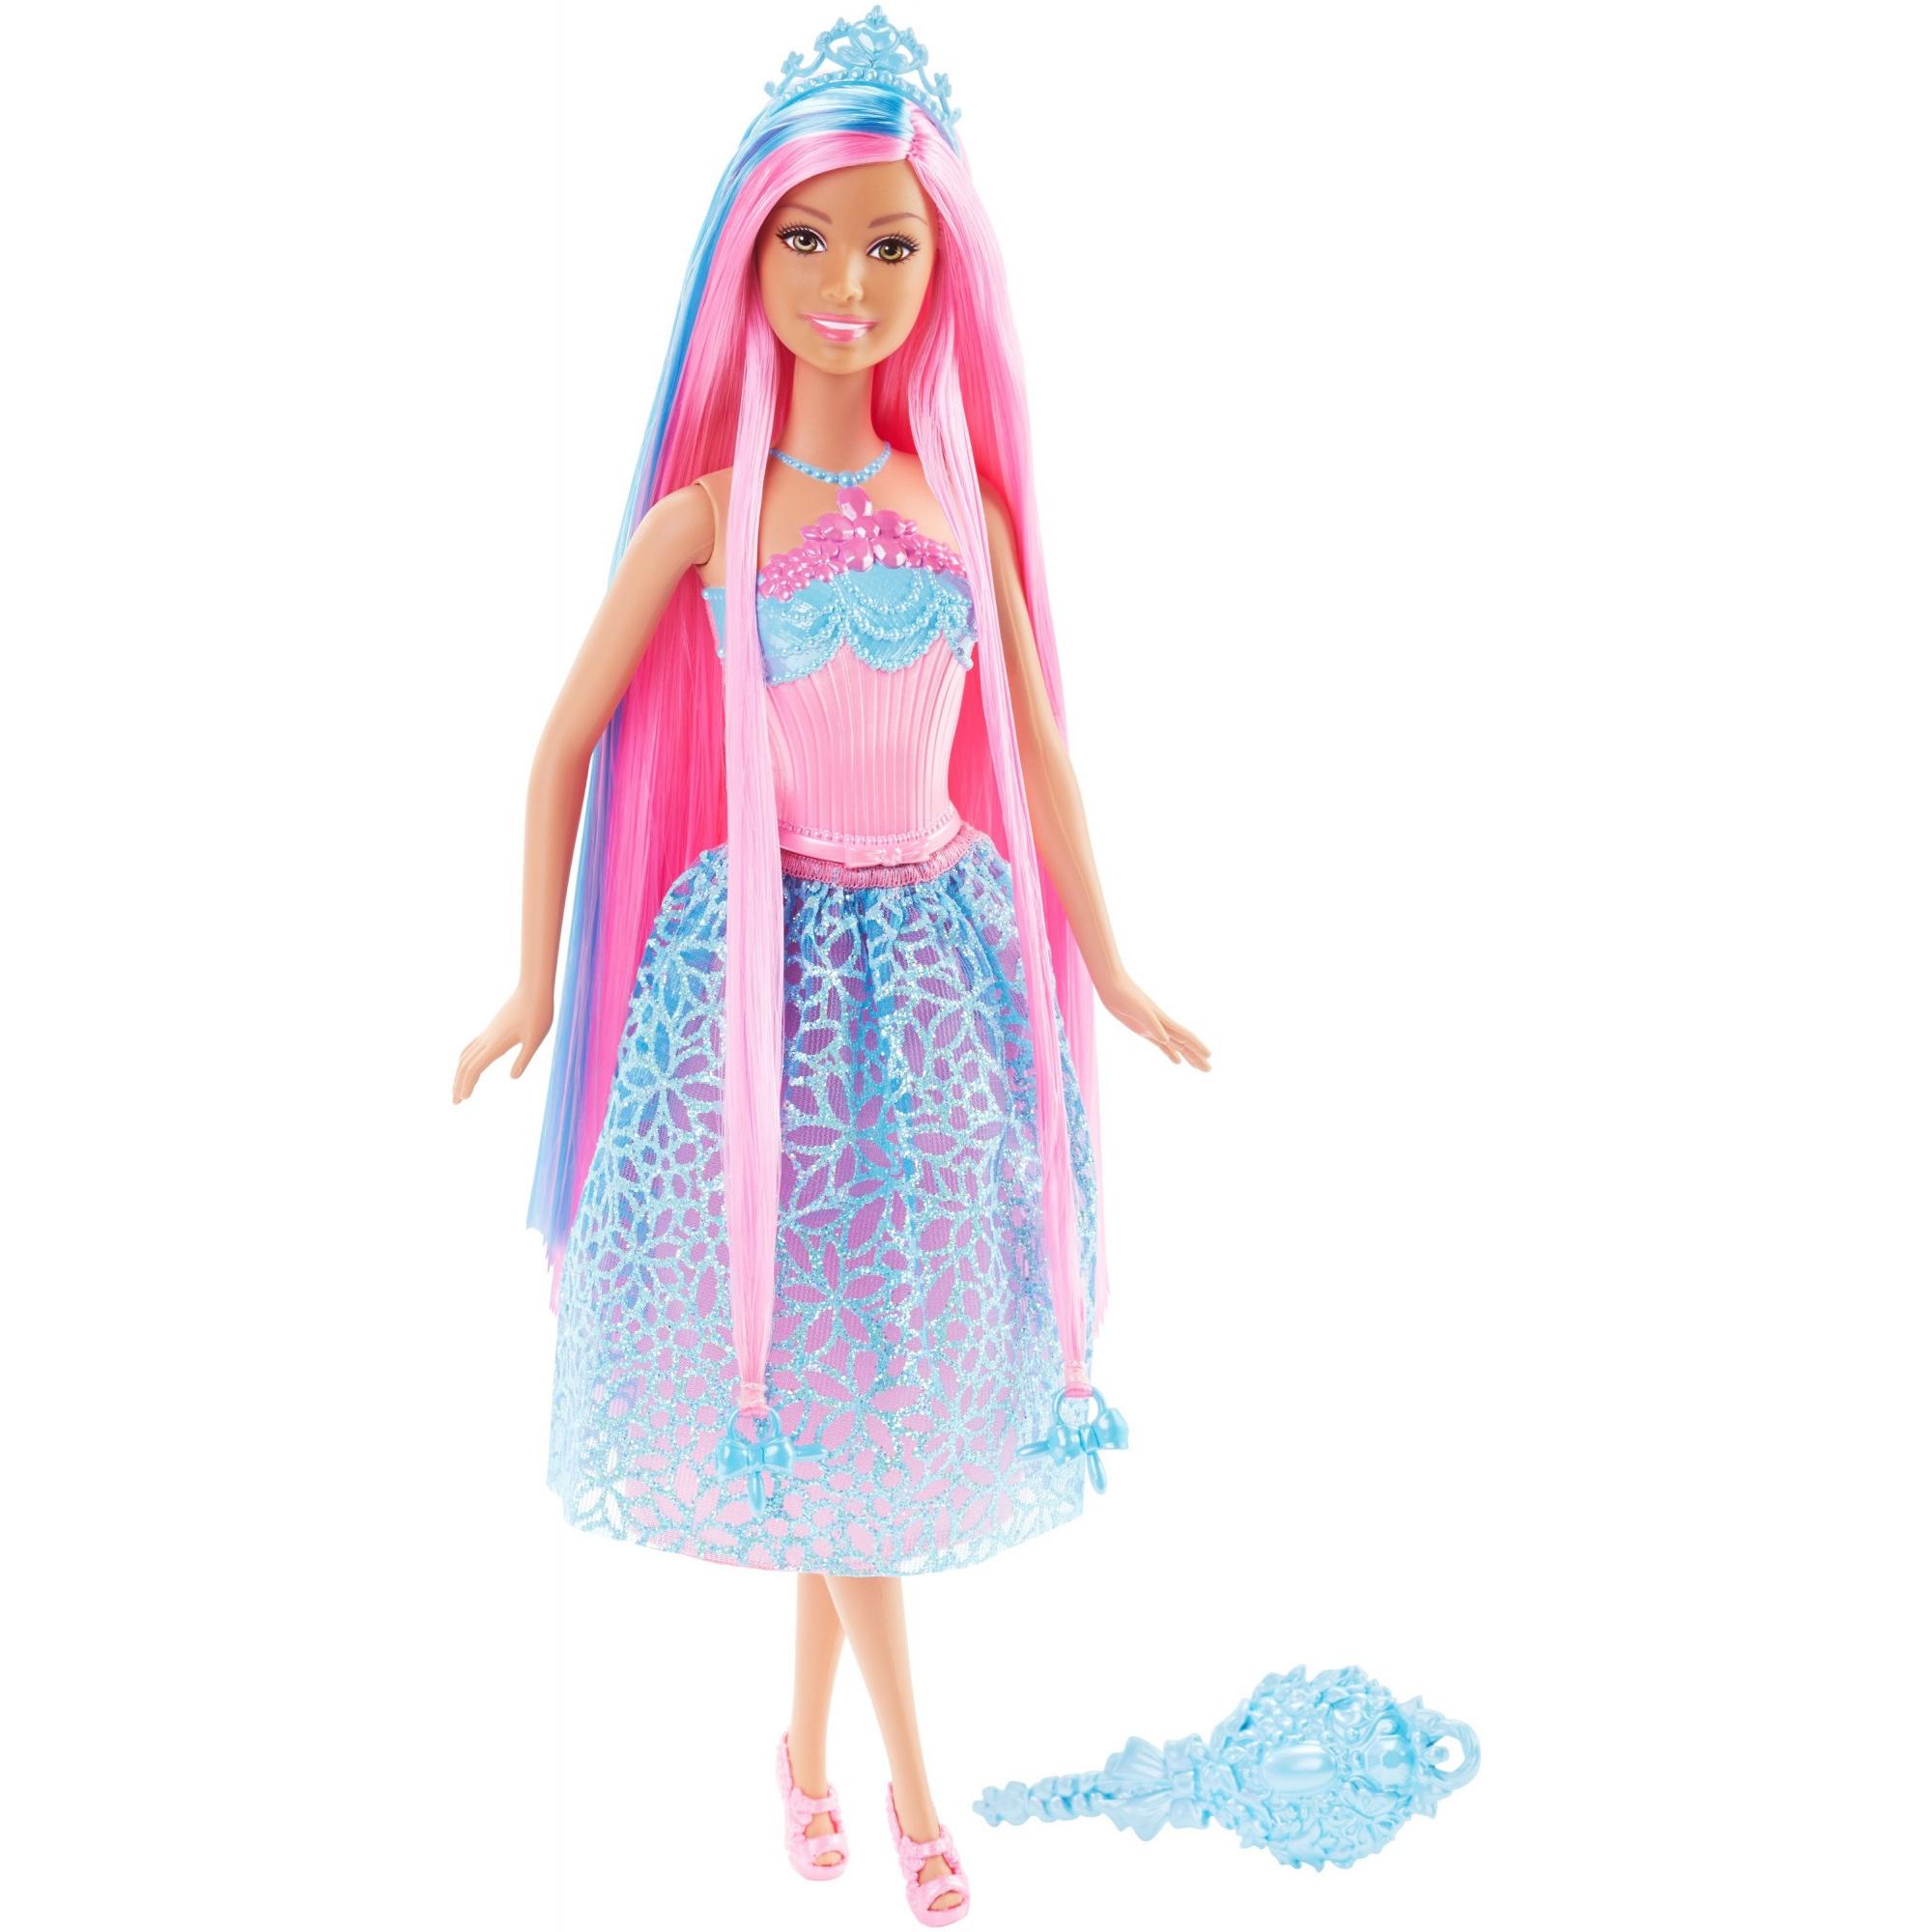 Barbie Endless Hair Kingdom Princess Doll Blue - image 1 of 7